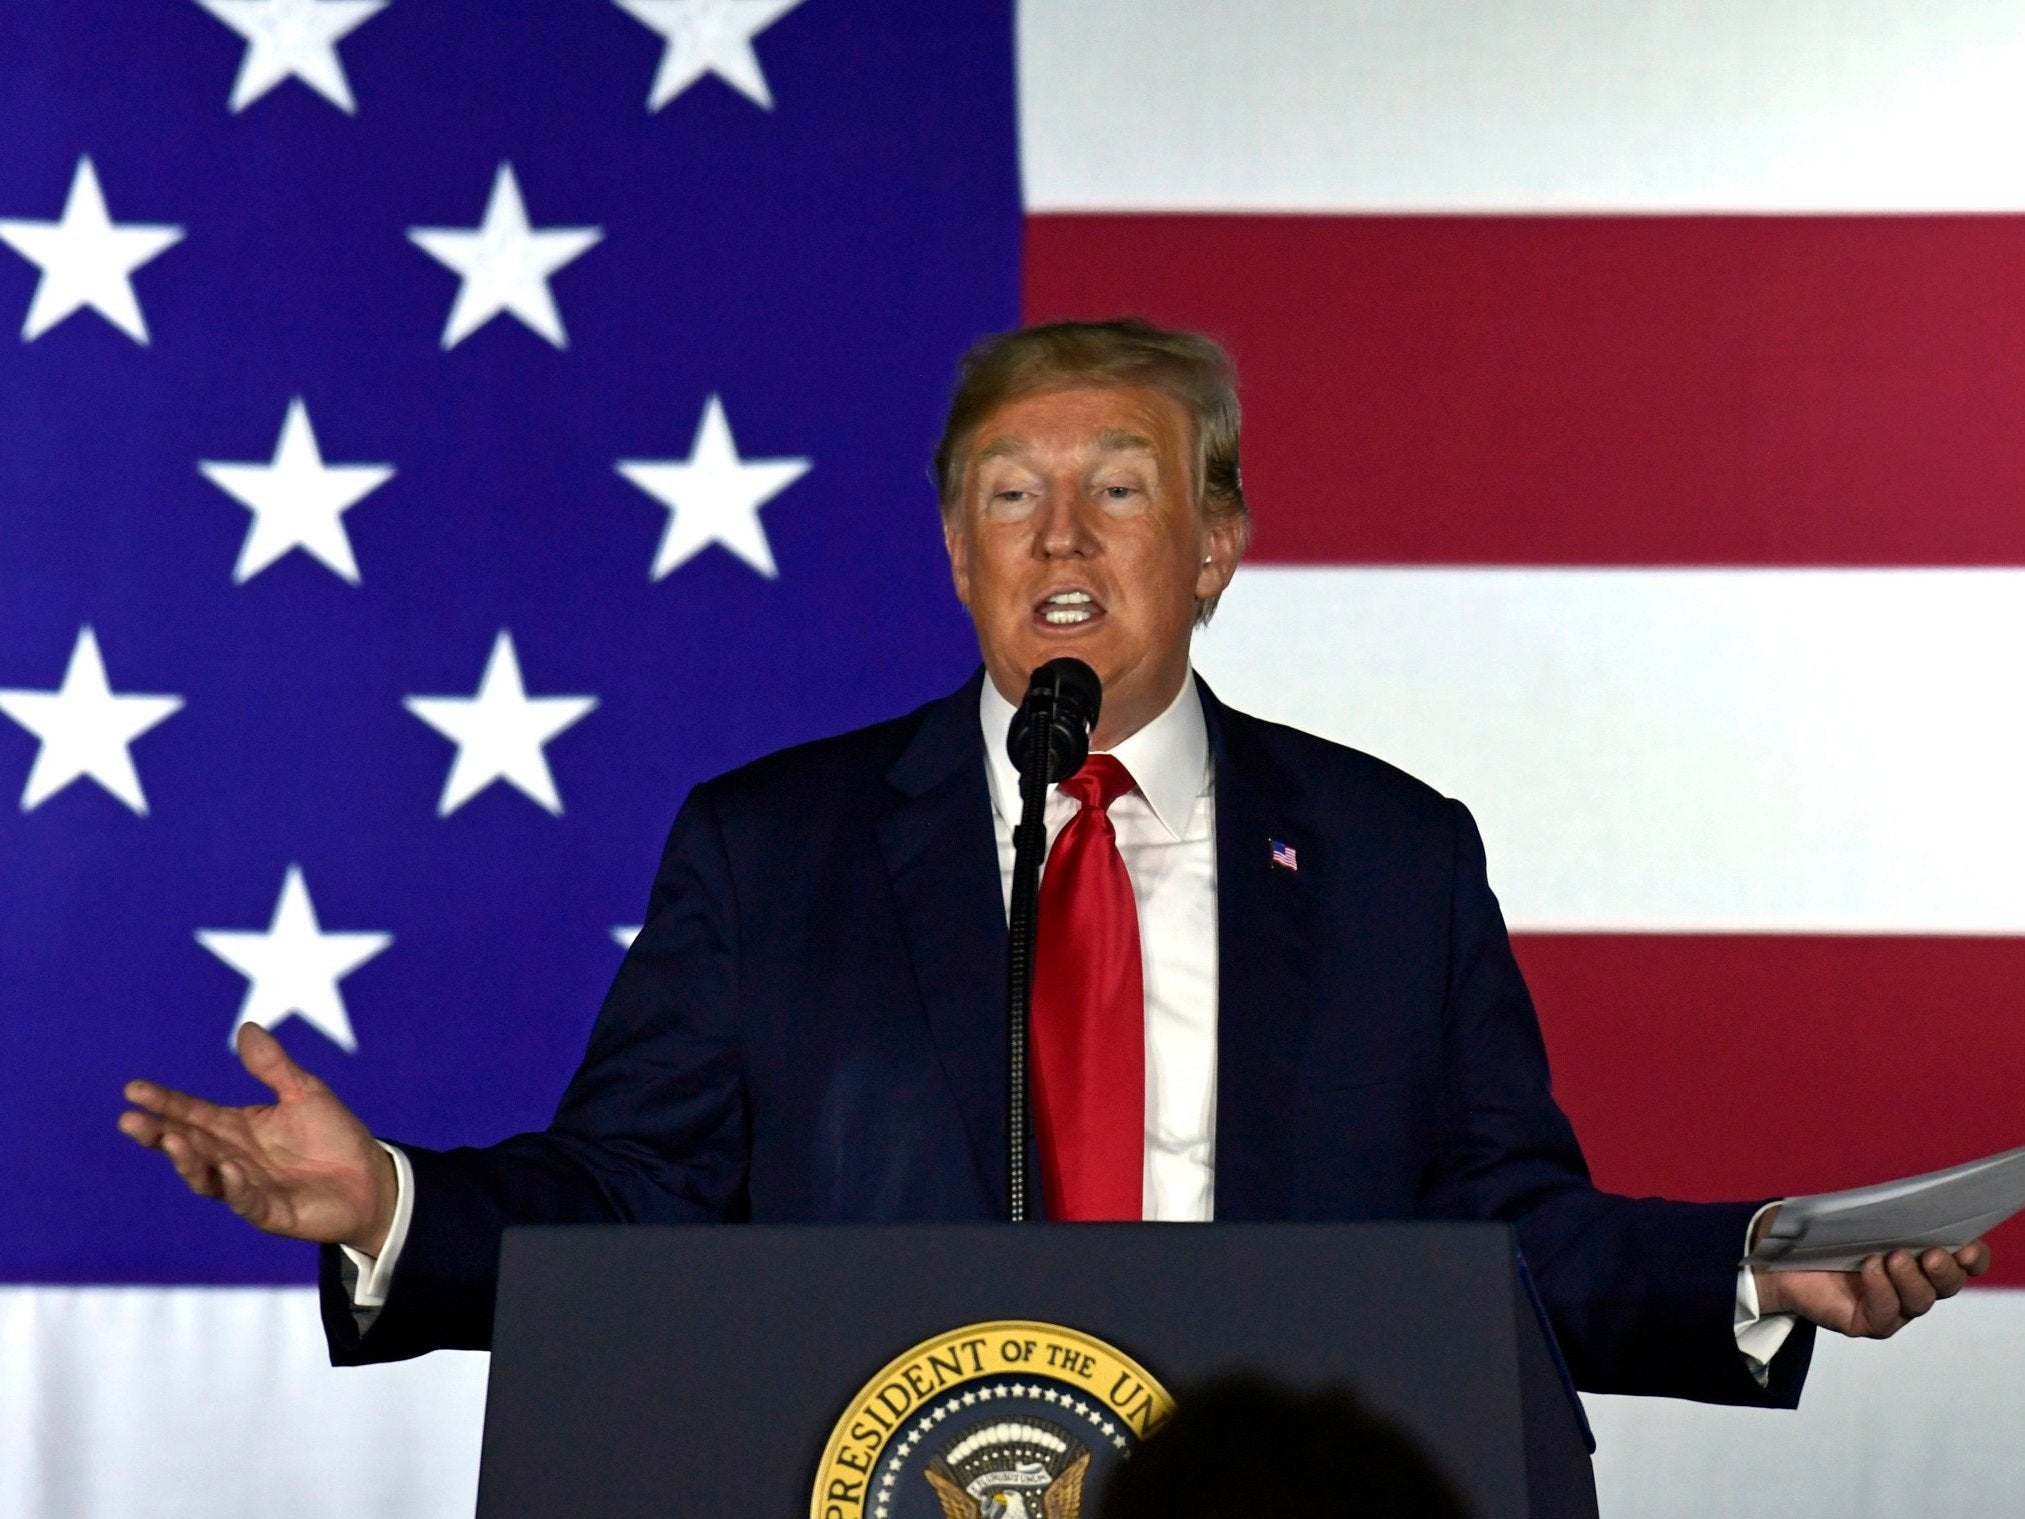 Donald Trump speaks at a fundraiser in Fargo, North Dakota